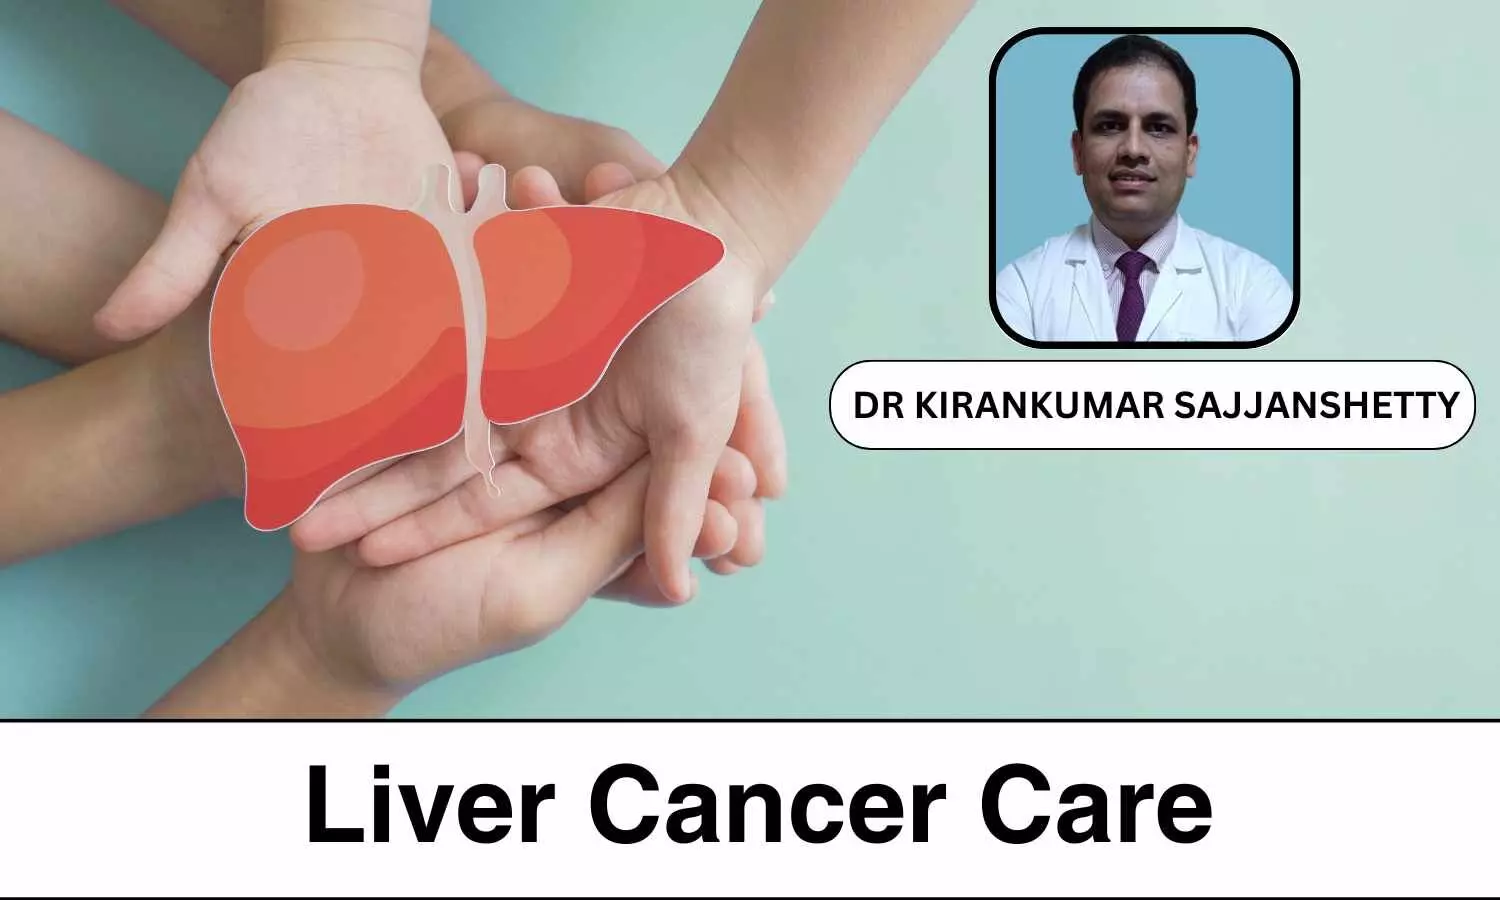 Liver Cancer Care: Diagnosis, Treatment Options, and Recovery Tips - Dr Kirankumar Sajjanshetty